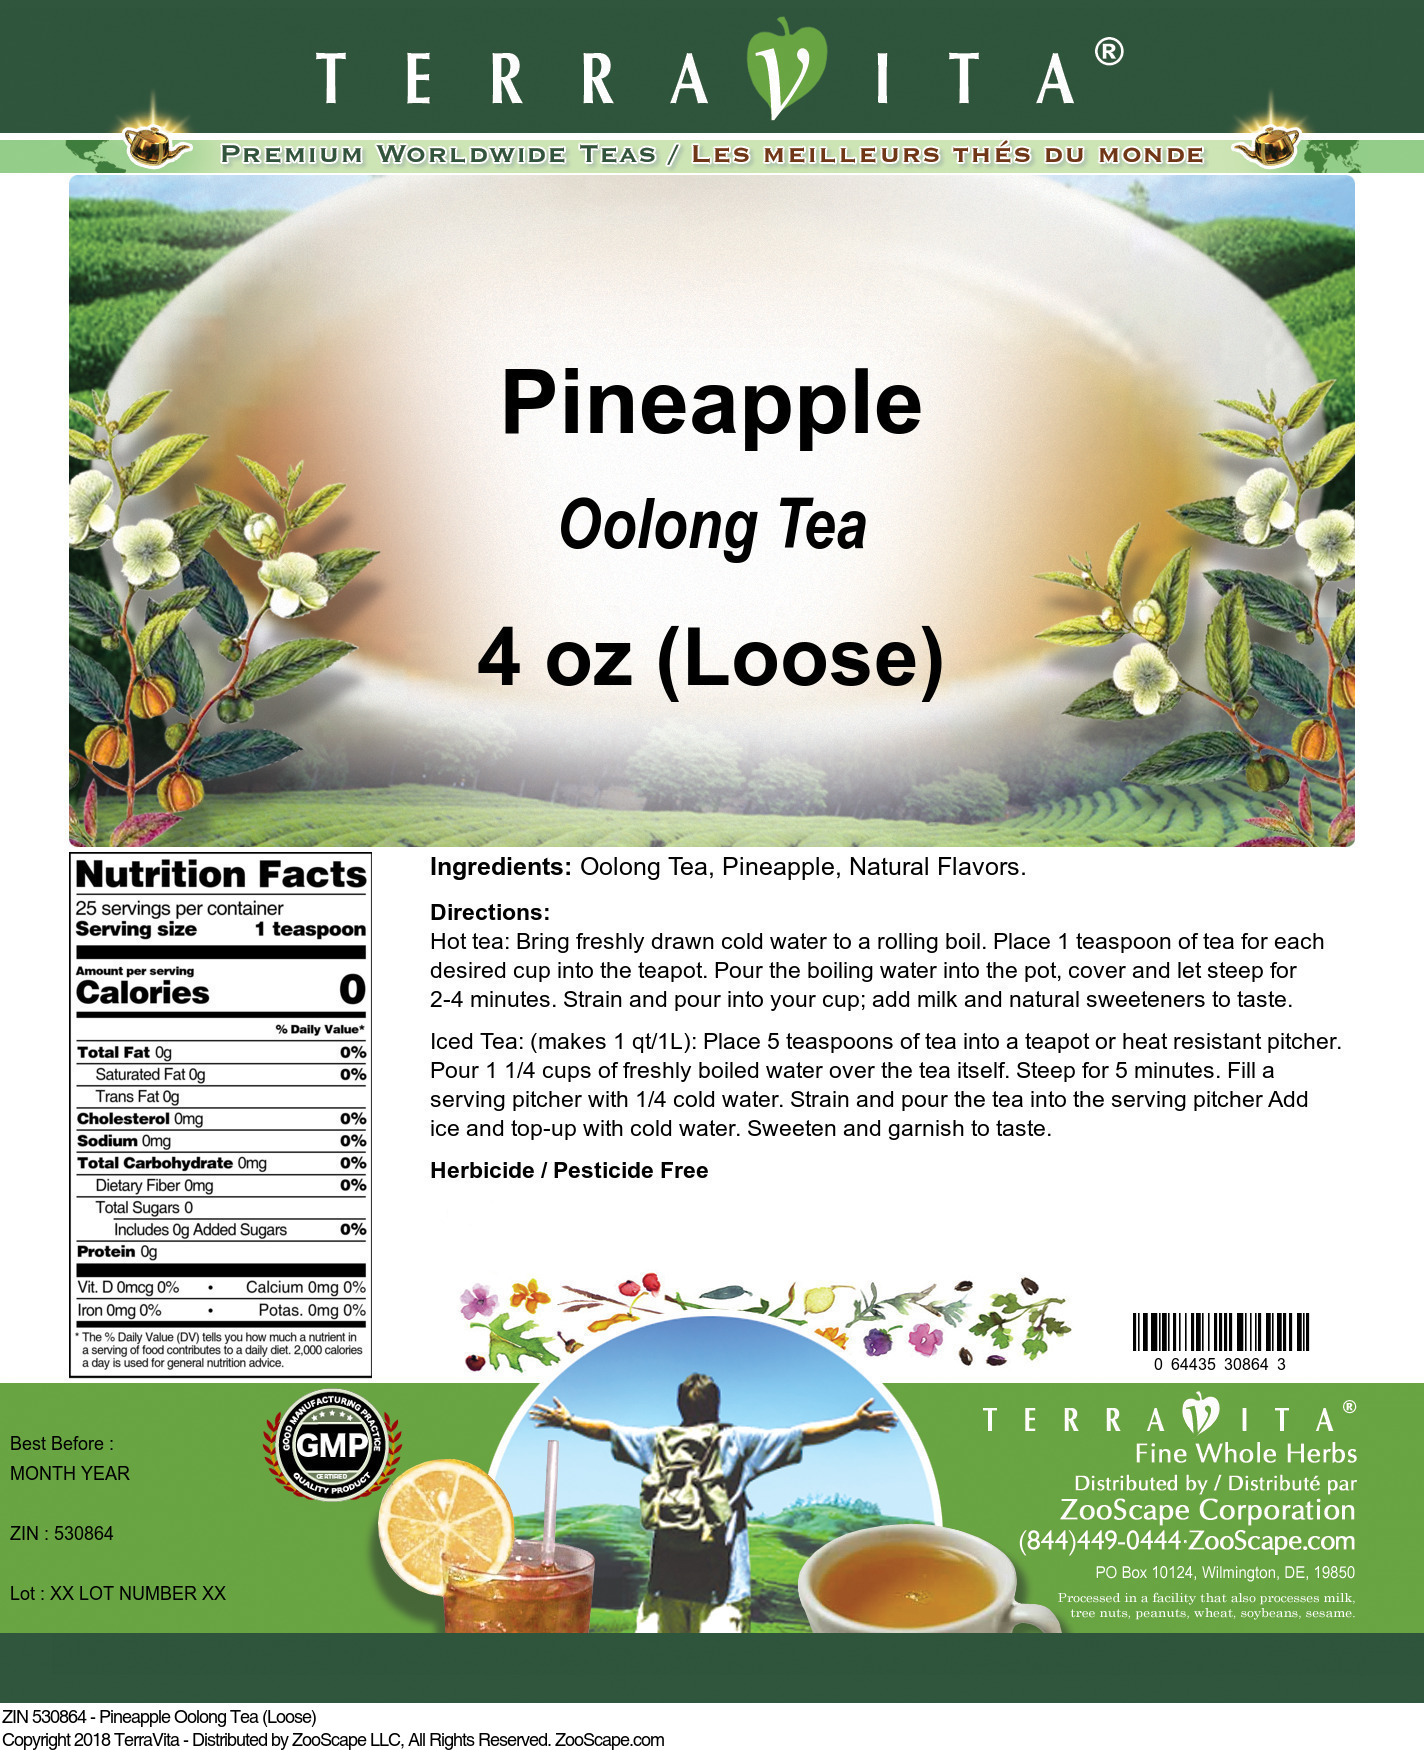 Pineapple Oolong Tea (Loose) - Label